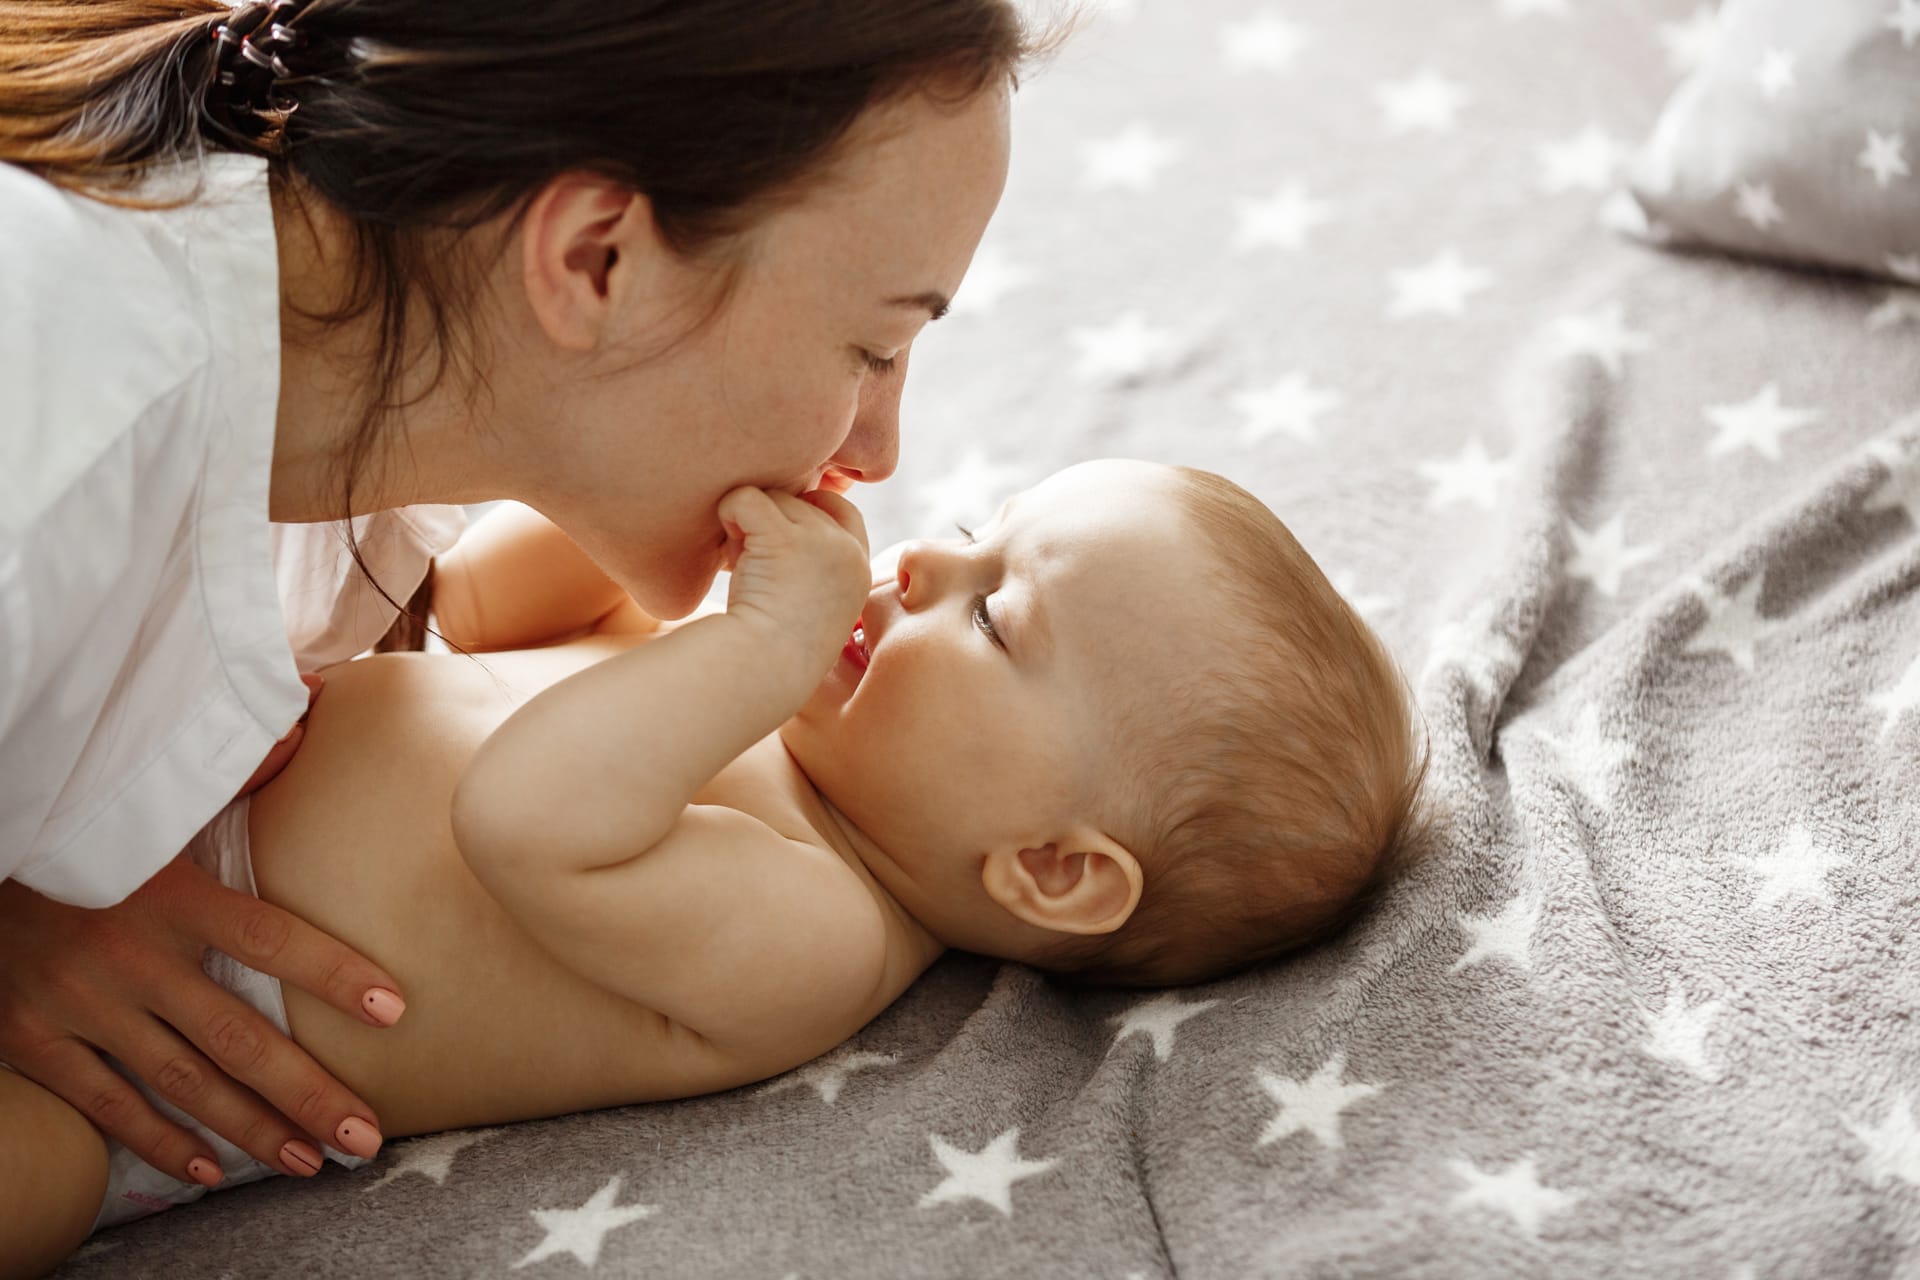 Her newborn son kissing gently biting his little hands happy motherhood concept